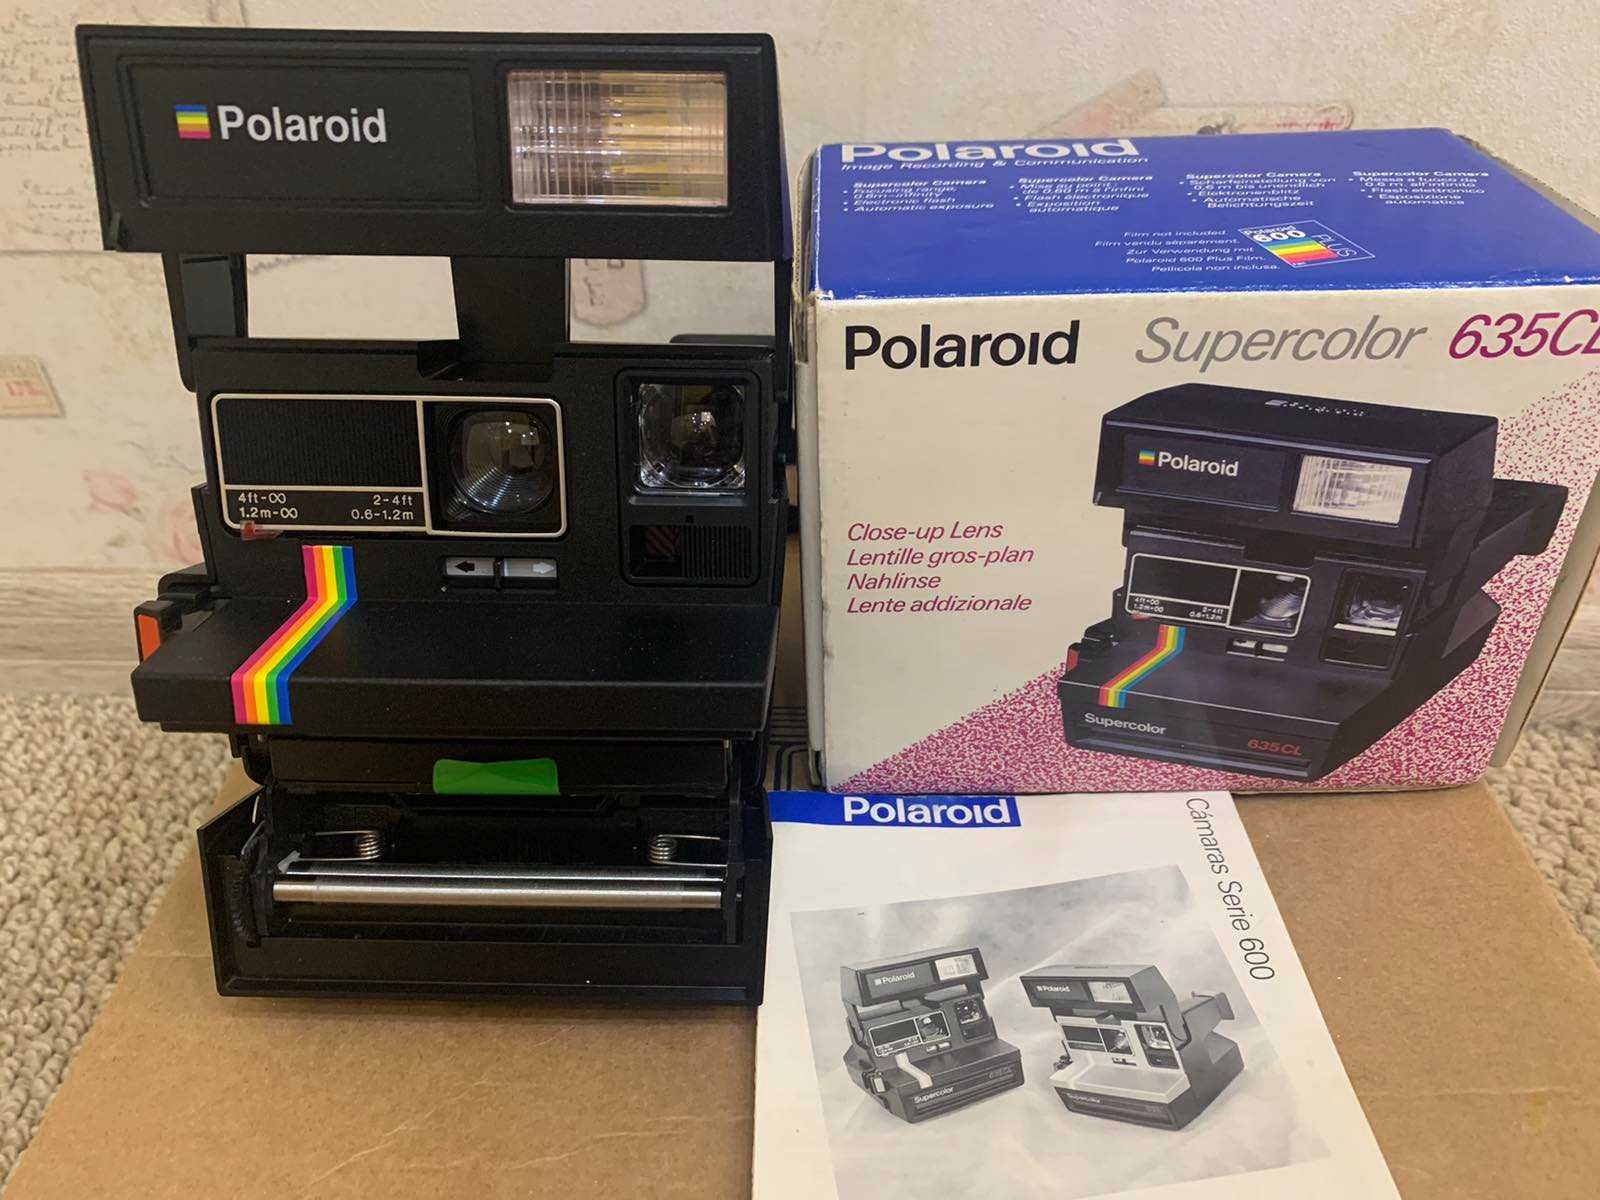 Polaroid Supercolor 635CL, Новый, Великобритания, Винтаж, Оригинал